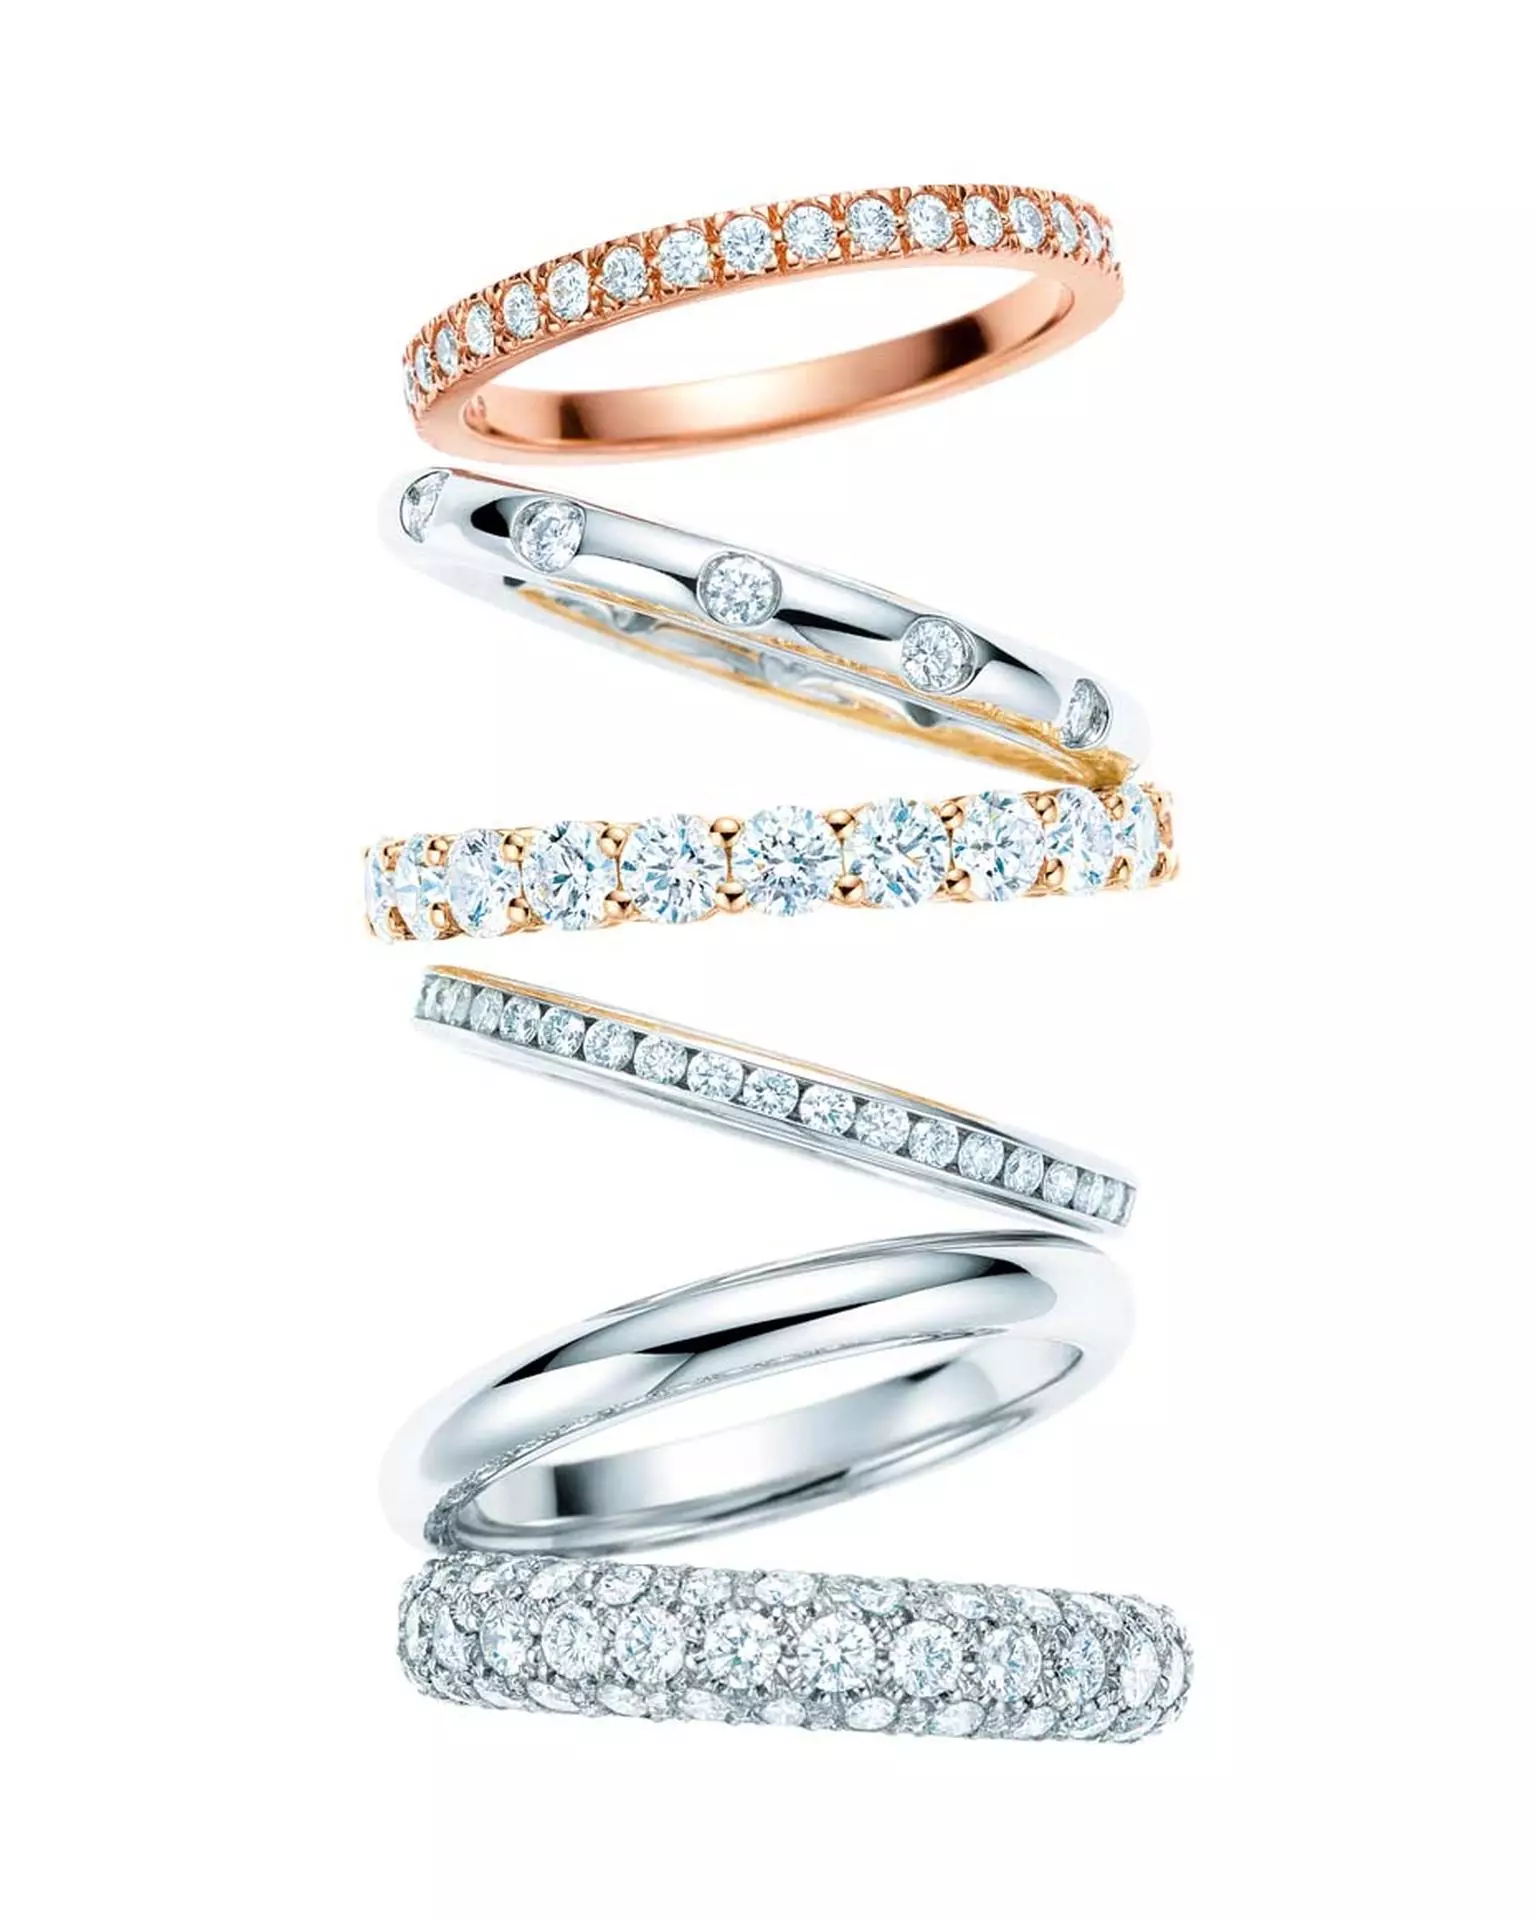 Ring Cartier (115 foto's): Jewelry Geskiedenis en Hersiening van Popular Trinity Models, spyker, Love, Koste 3102_99